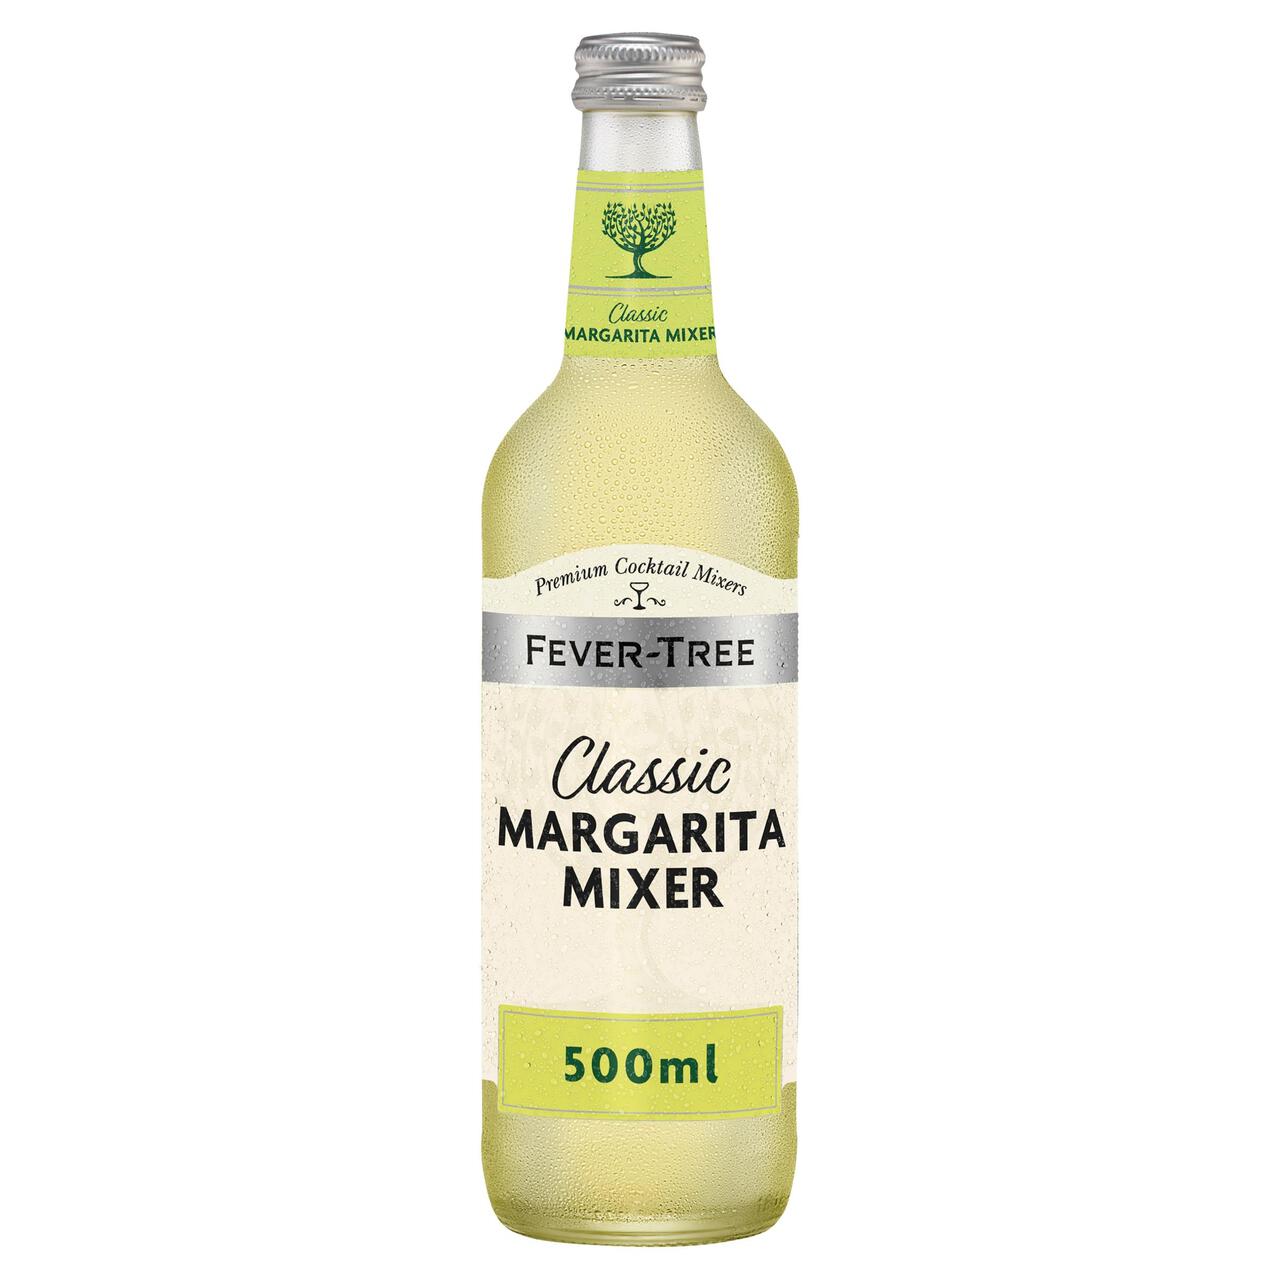 Fever-Tree Classic Margarita Mixer 500ml